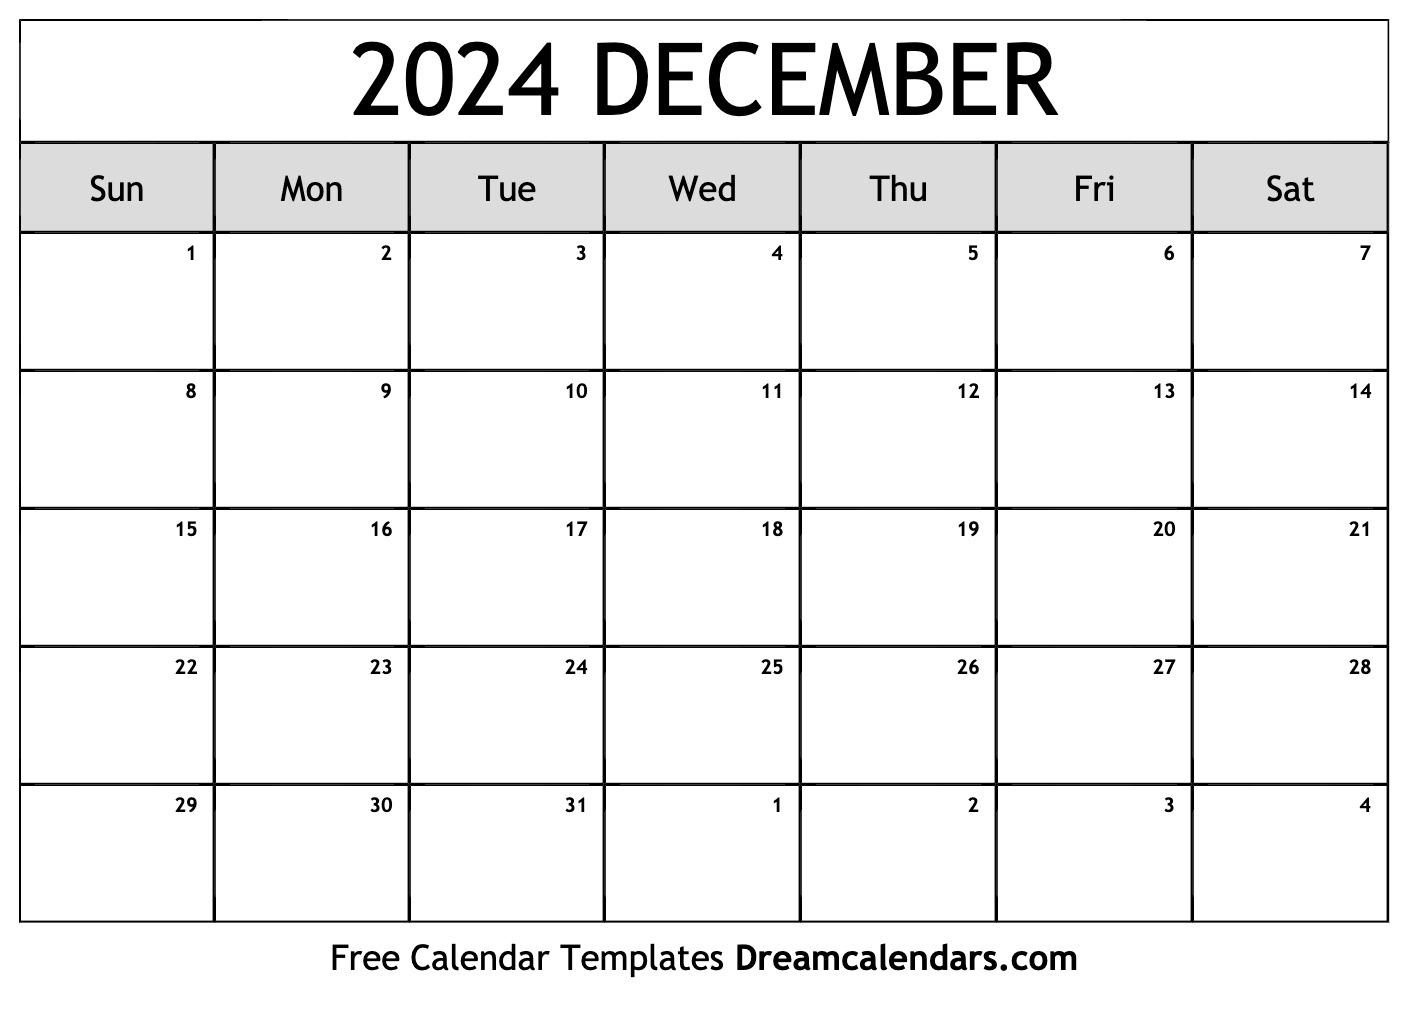 December 2024 Calendar | Free Blank Printable With Holidays with Free Printable Calendar 2024 Dec